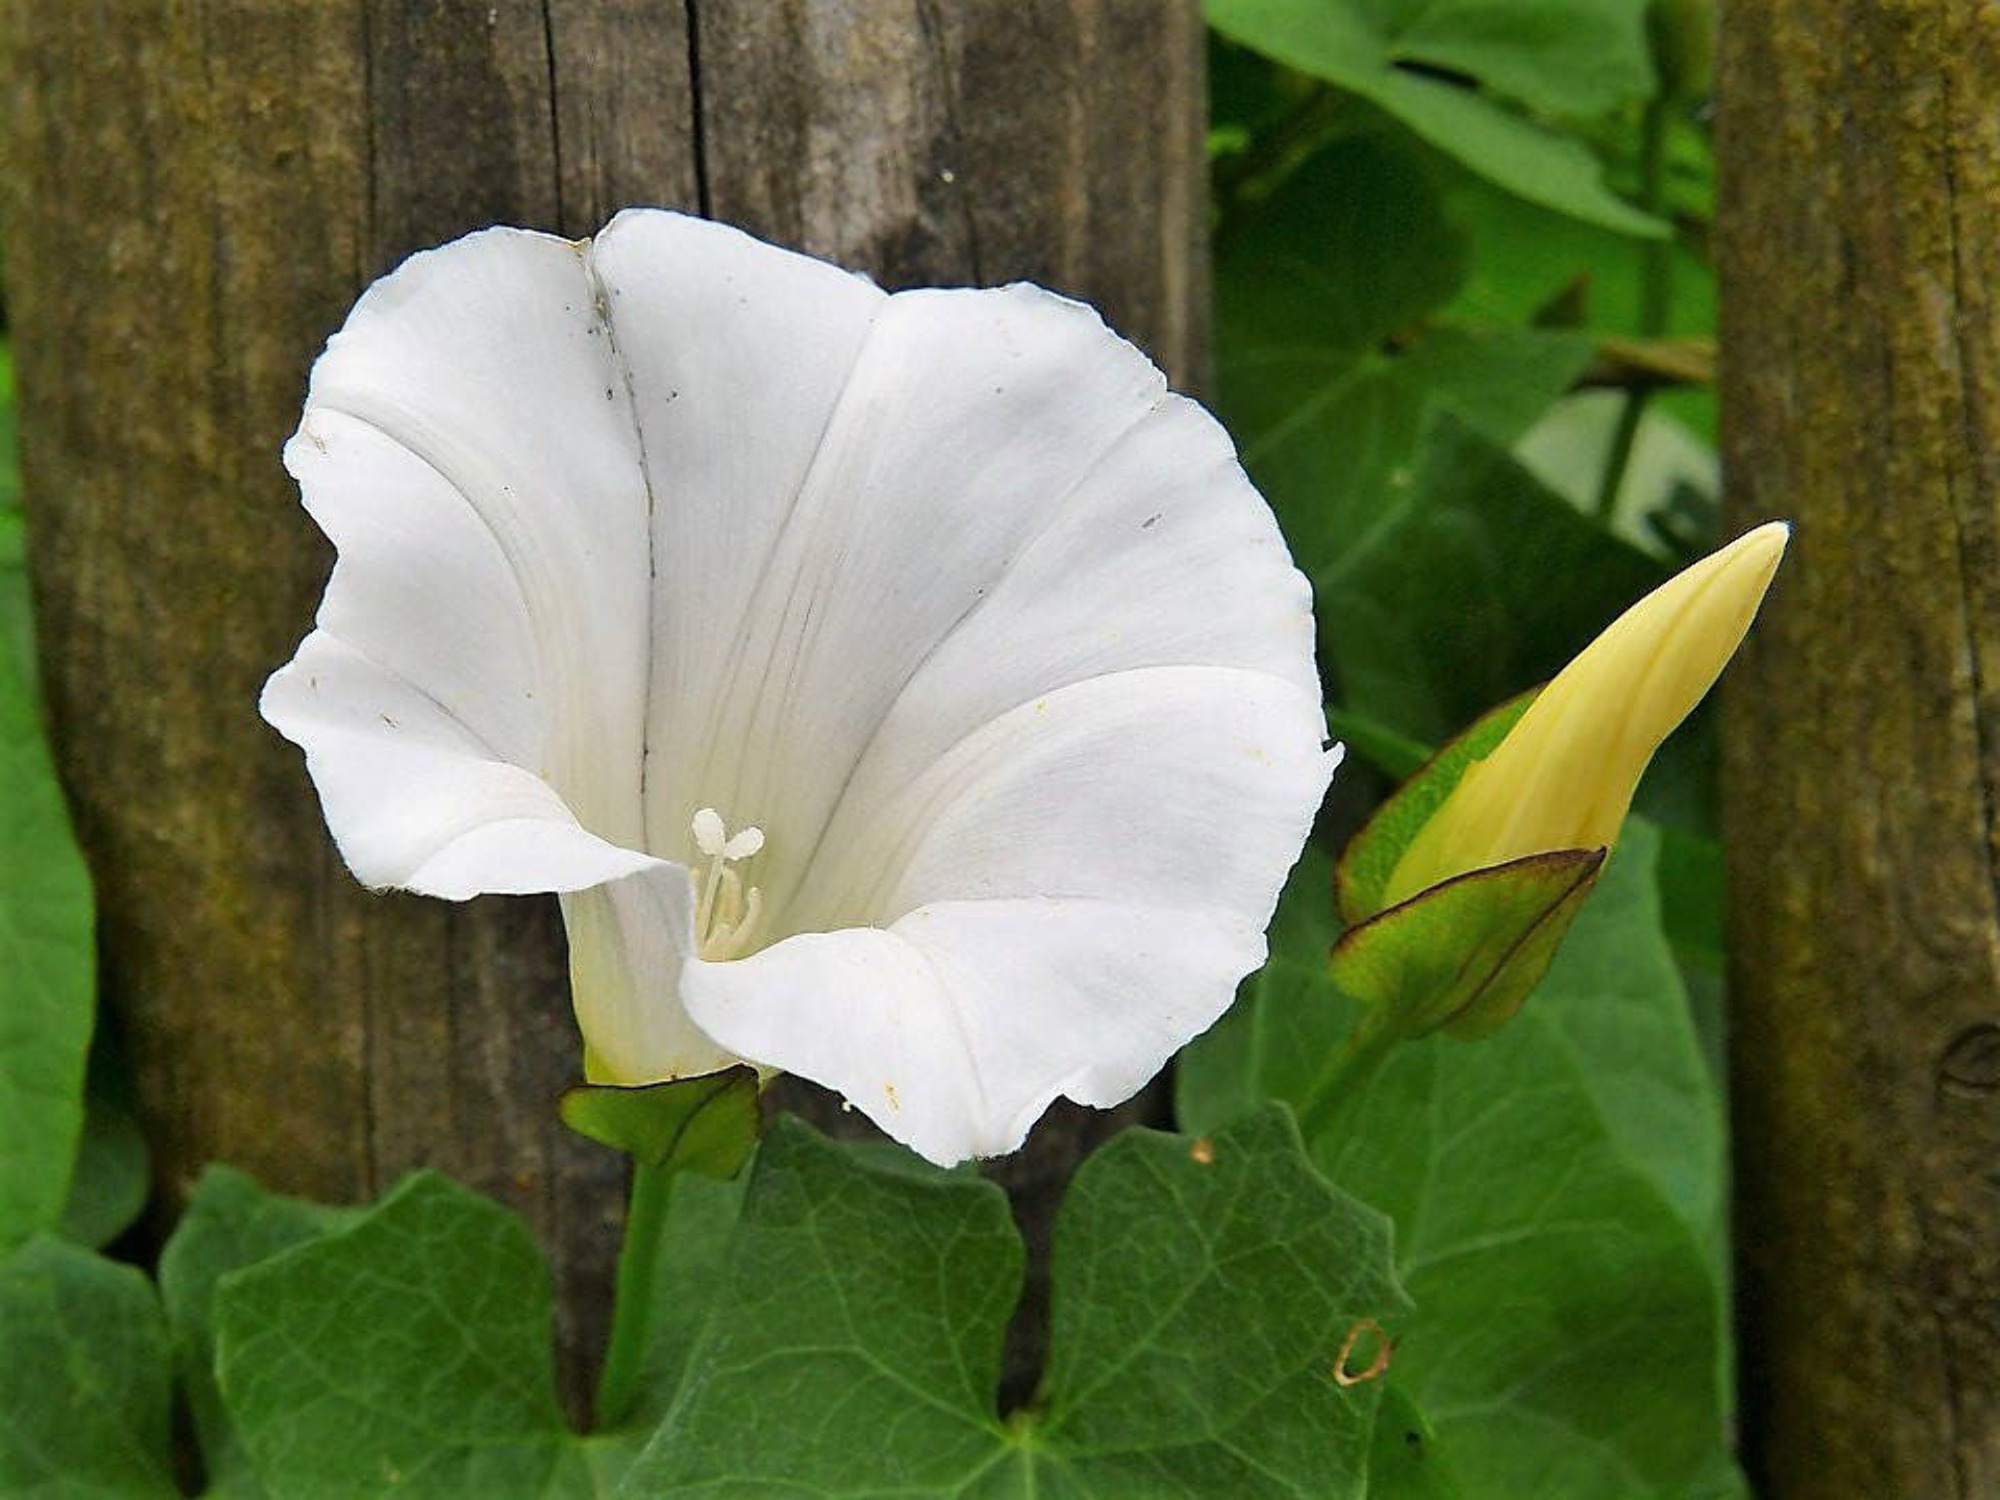 50 MOONFLOWER MORNING GLORY White Moon Flower Ipomoea Alba Flower Vine Seeds - image 1 of 10